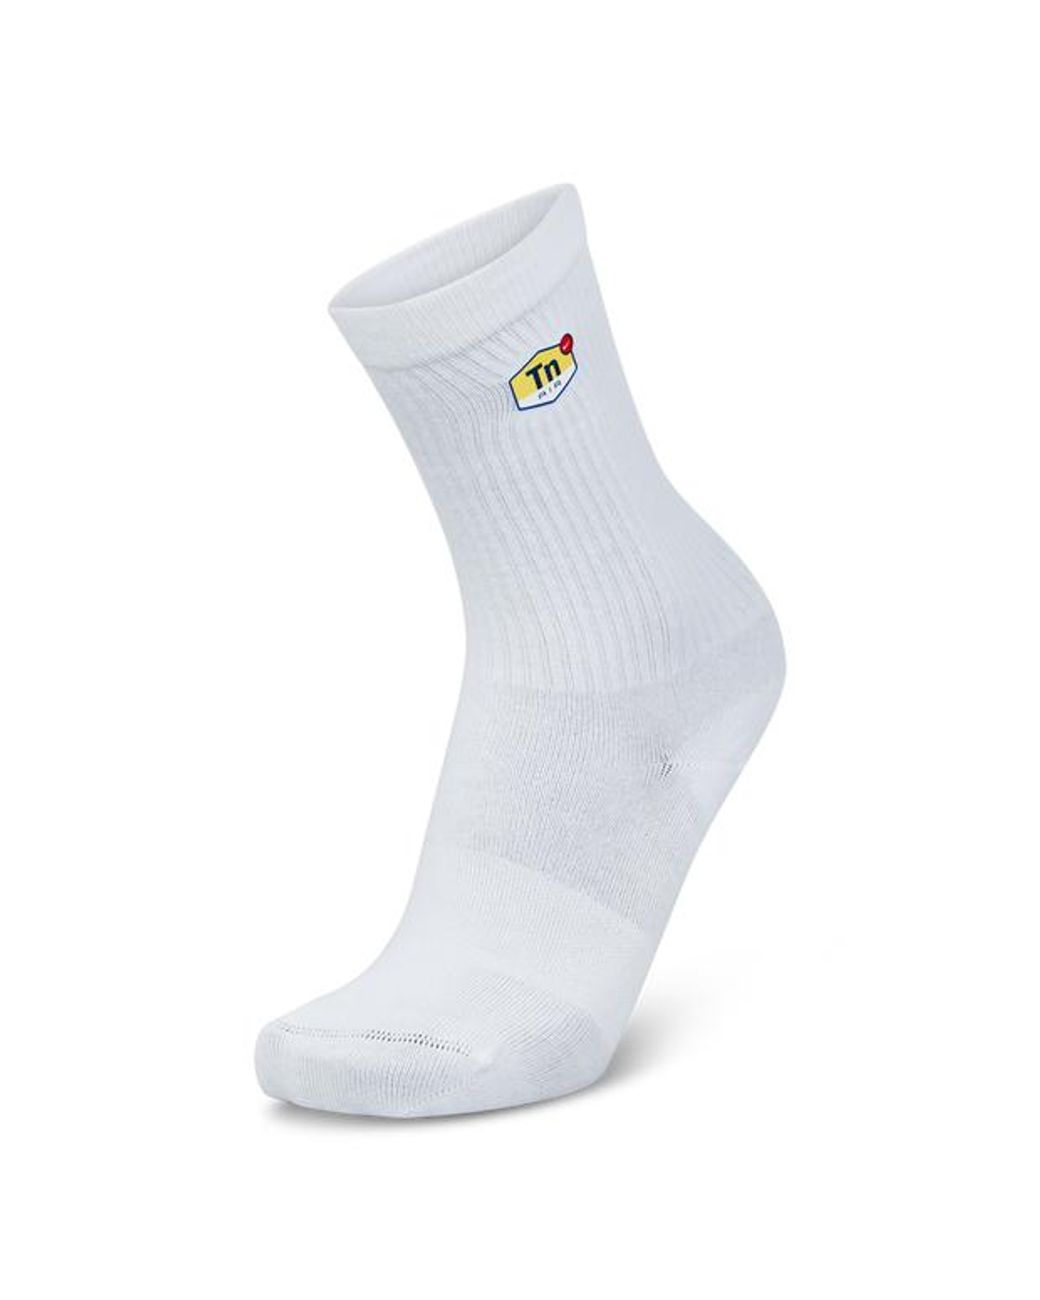 Nike Tn Crew Socks in White | Lyst UK